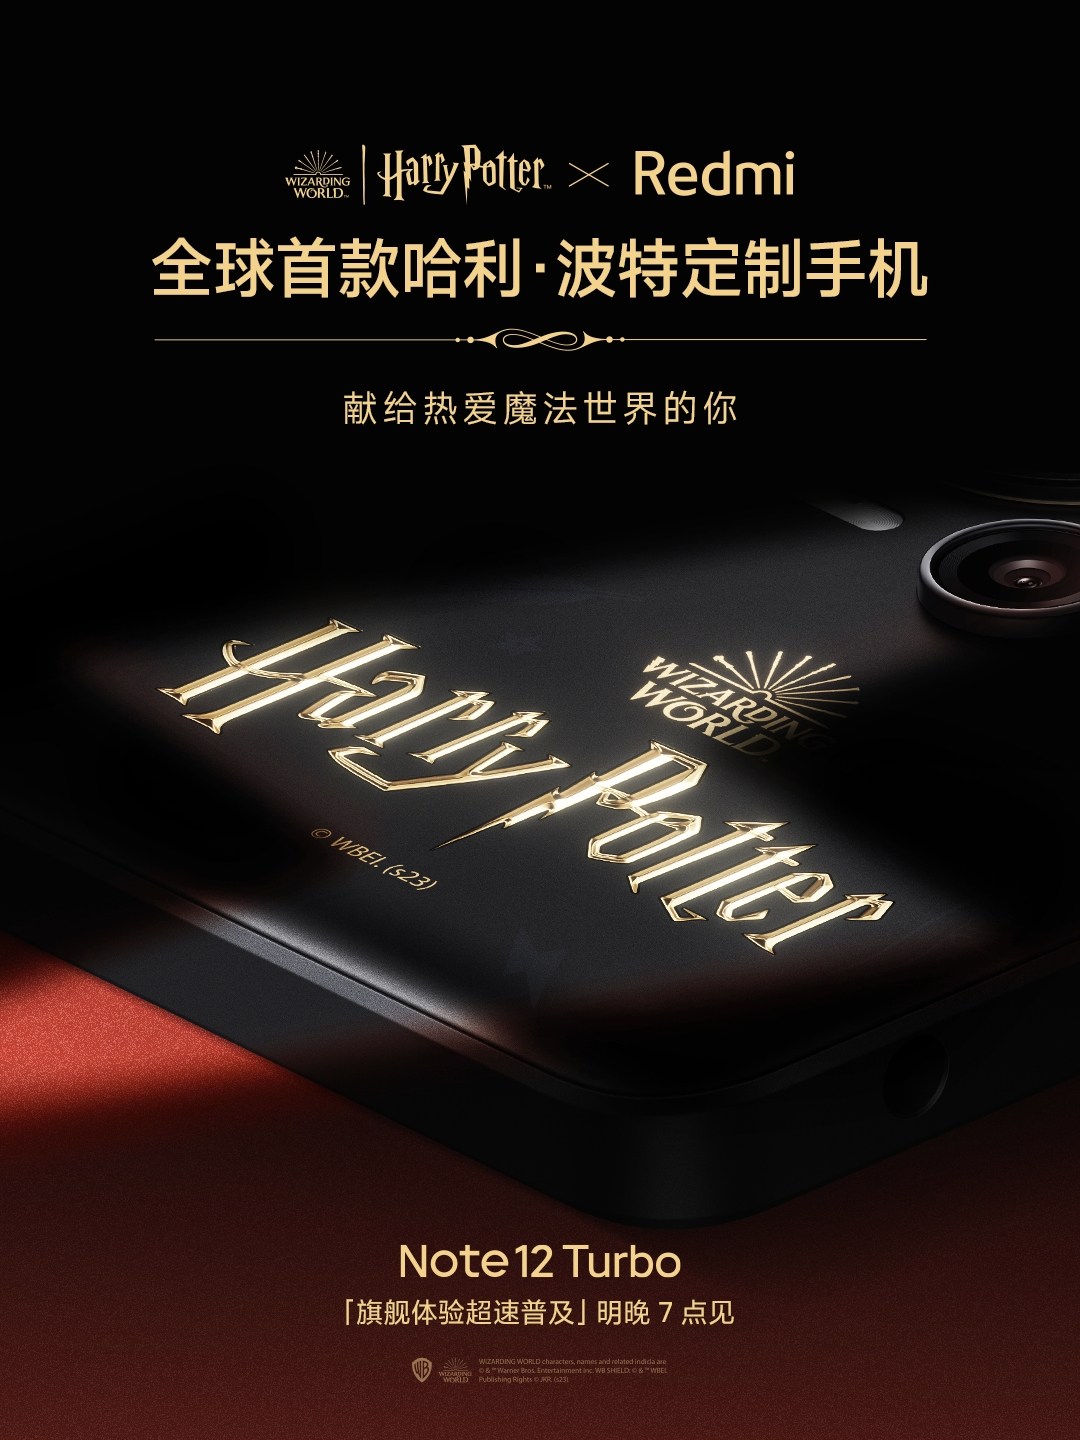 Xiaomi анонсировала смартфон Redmi Note 12 Turbo Harry Potter Custom Edition в стиле Гарри Поттера